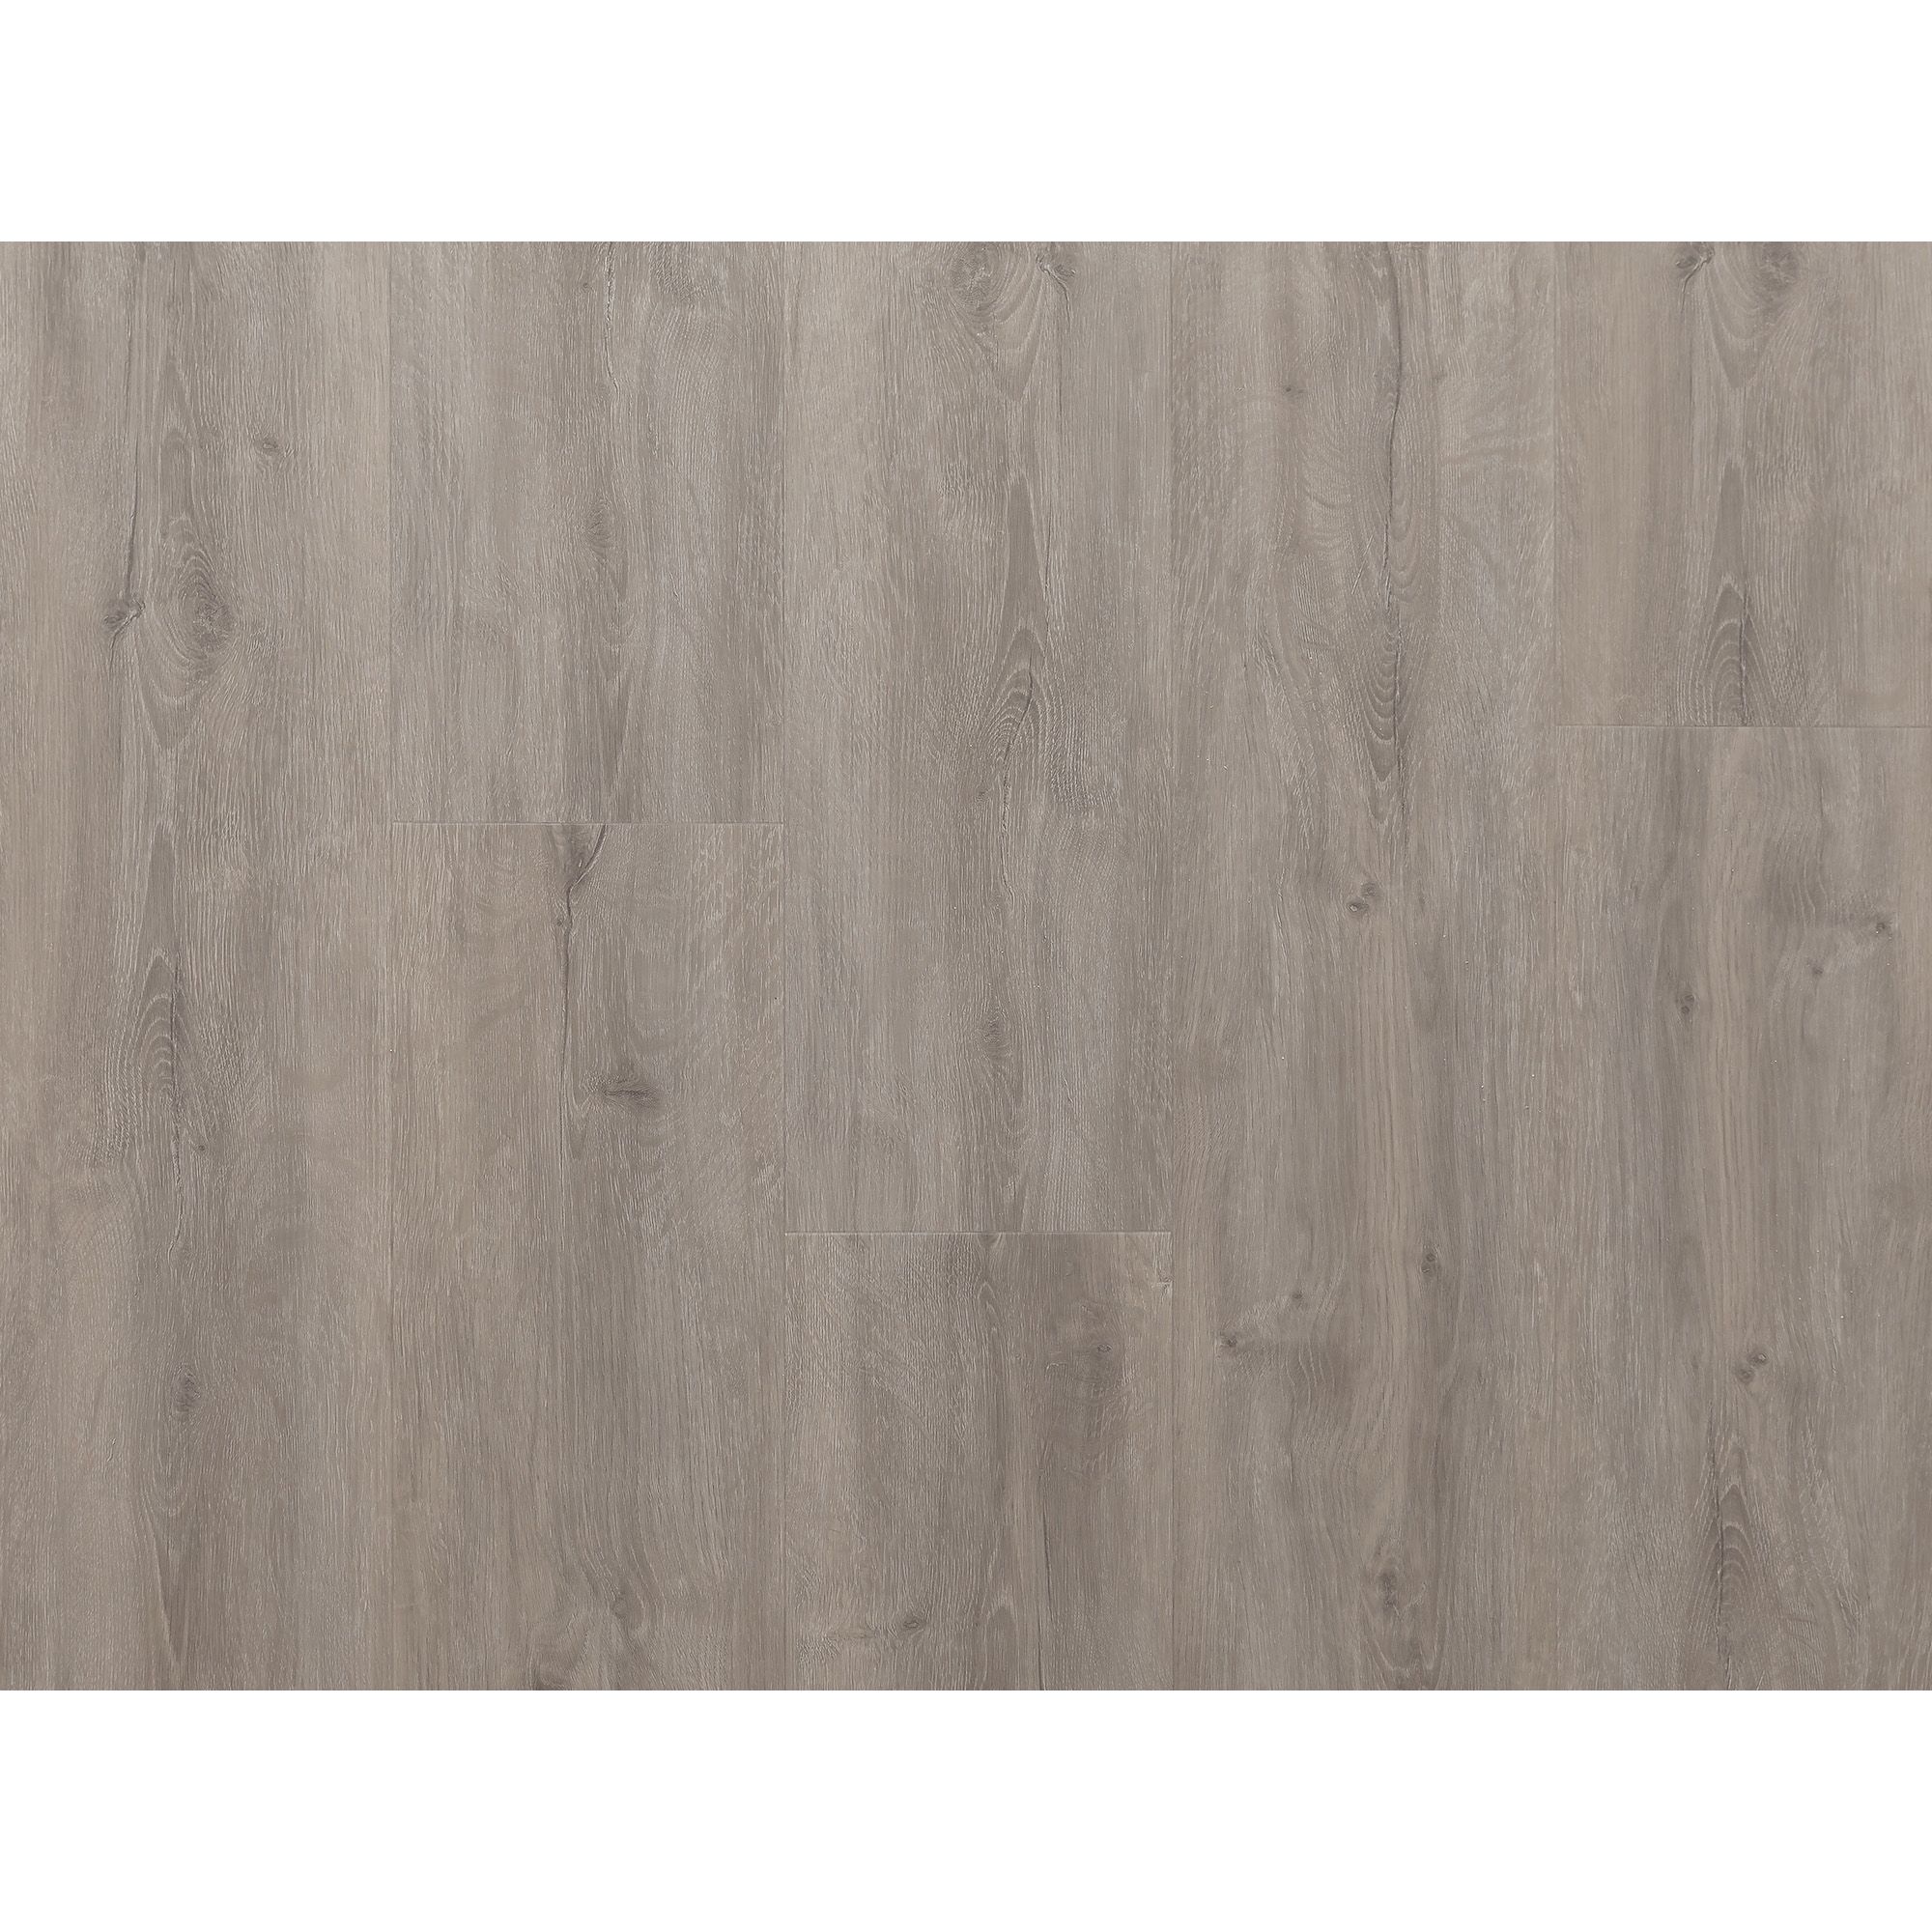 NewAge Products Stone Composite Garage Flooring LVP Bundles Gray Oak - 350 Sq. F